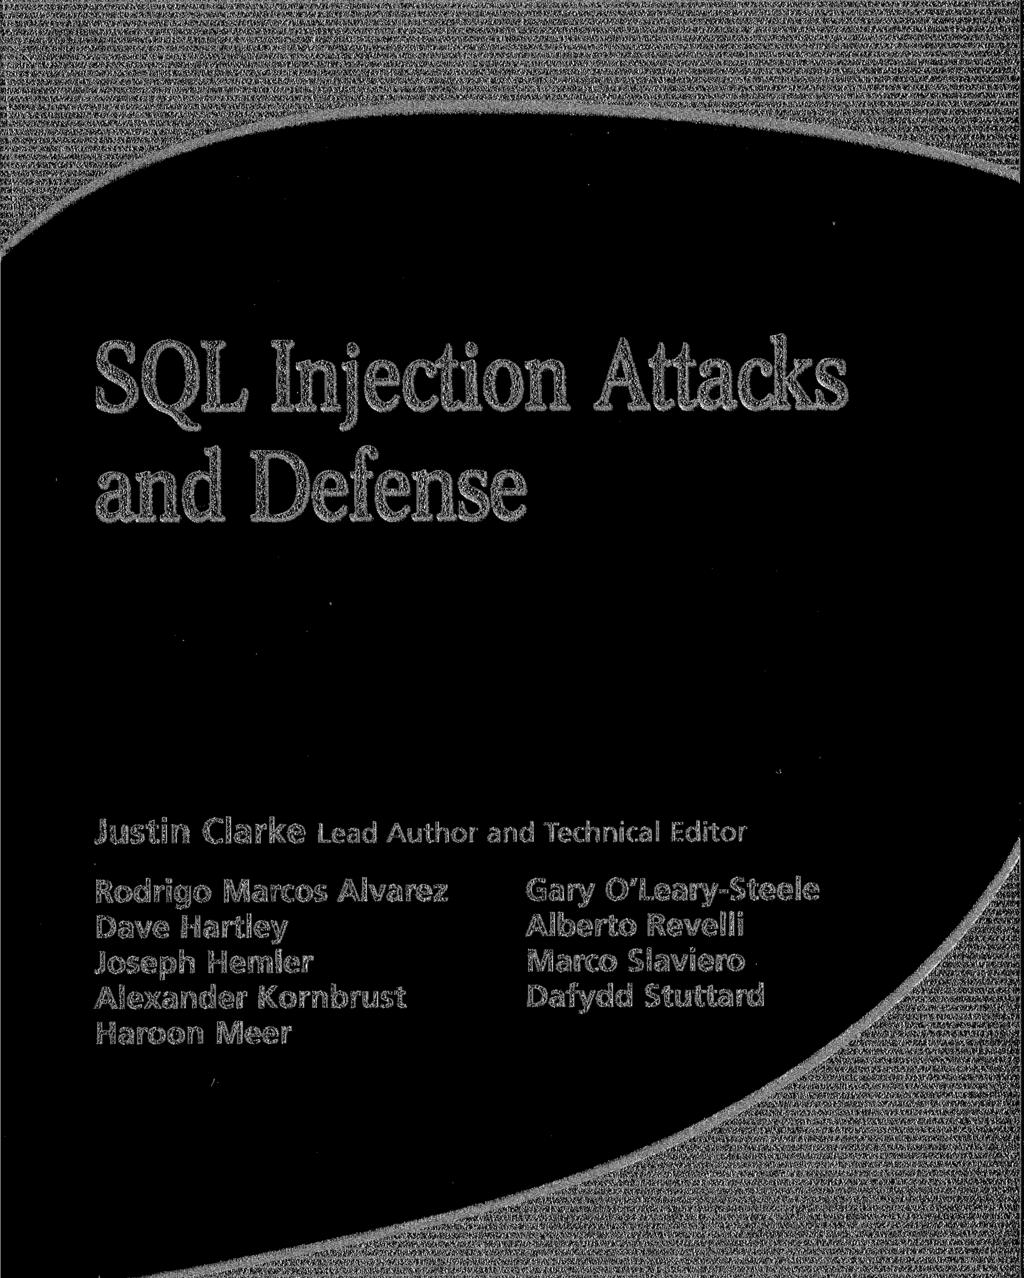 SQL Injection Attacks and Defense Justin Clarke Lead Author and Technical Editor Rodrigo Marcos Alvarez Dave